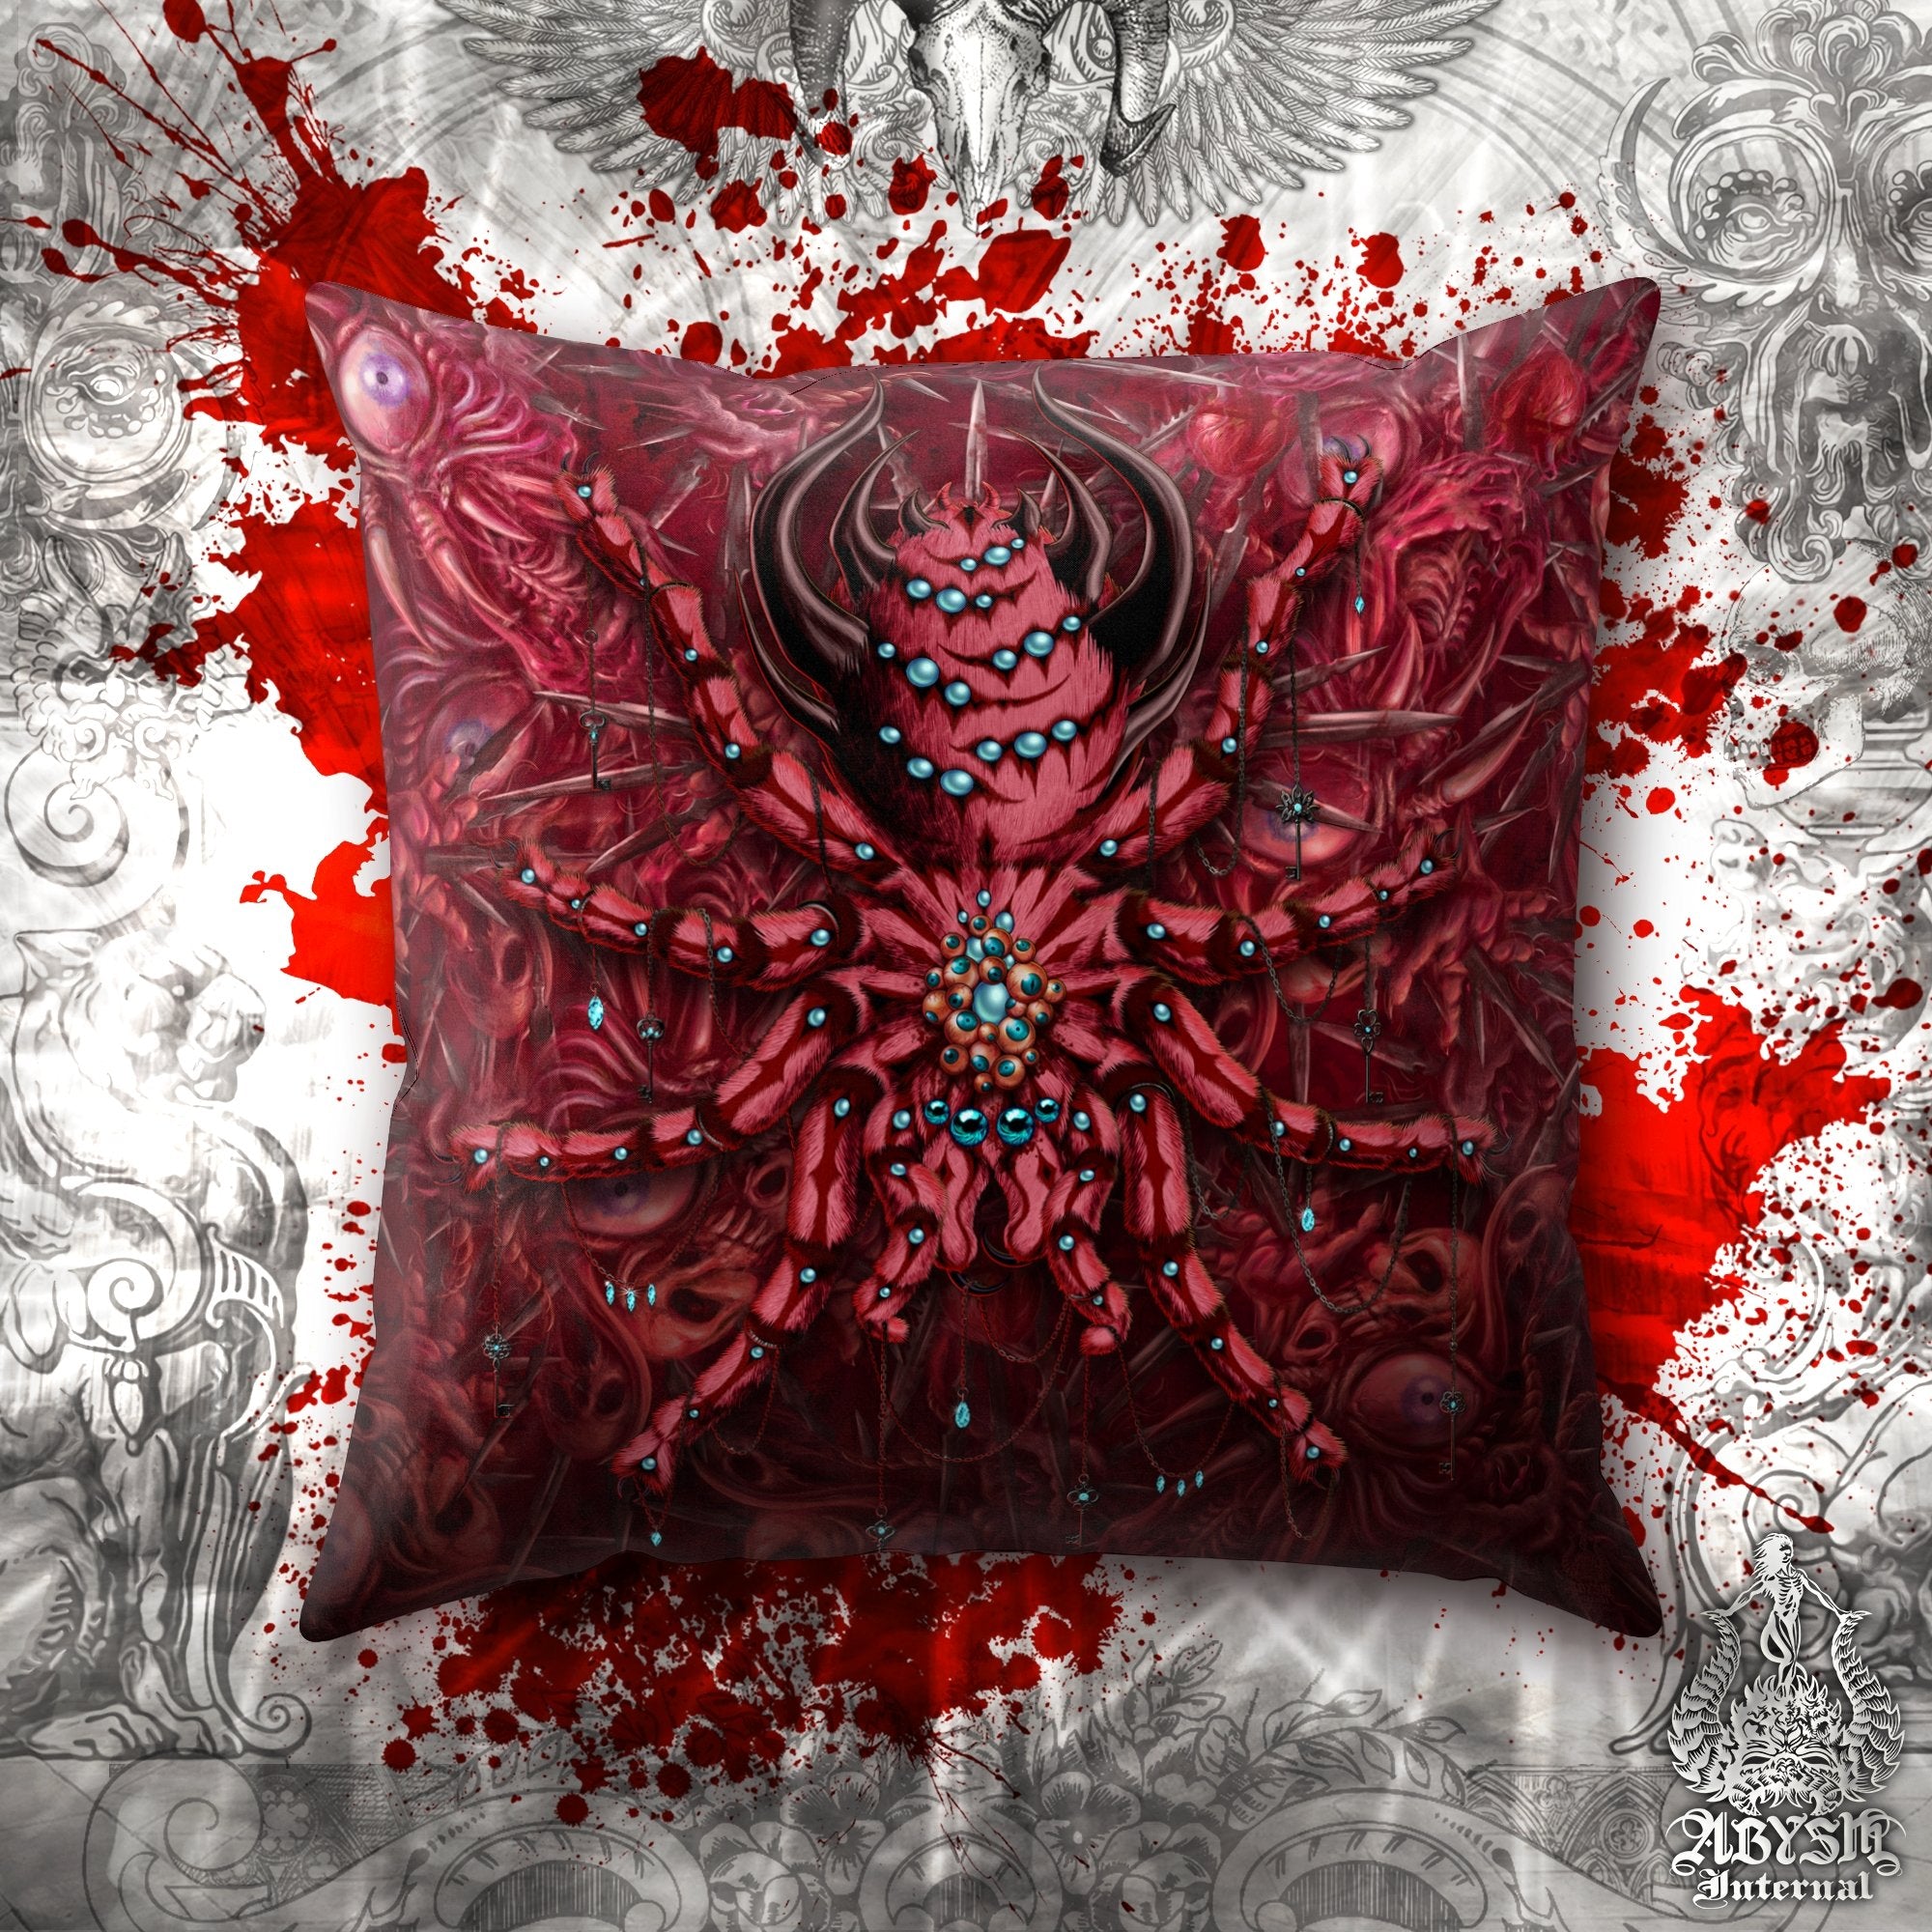 Horror Throw Pillow, Decorative Accent Cushion, Halloween Room Decor, Alternative Home - Tarantula, Spider, Gore and Blood - Abysm Internal